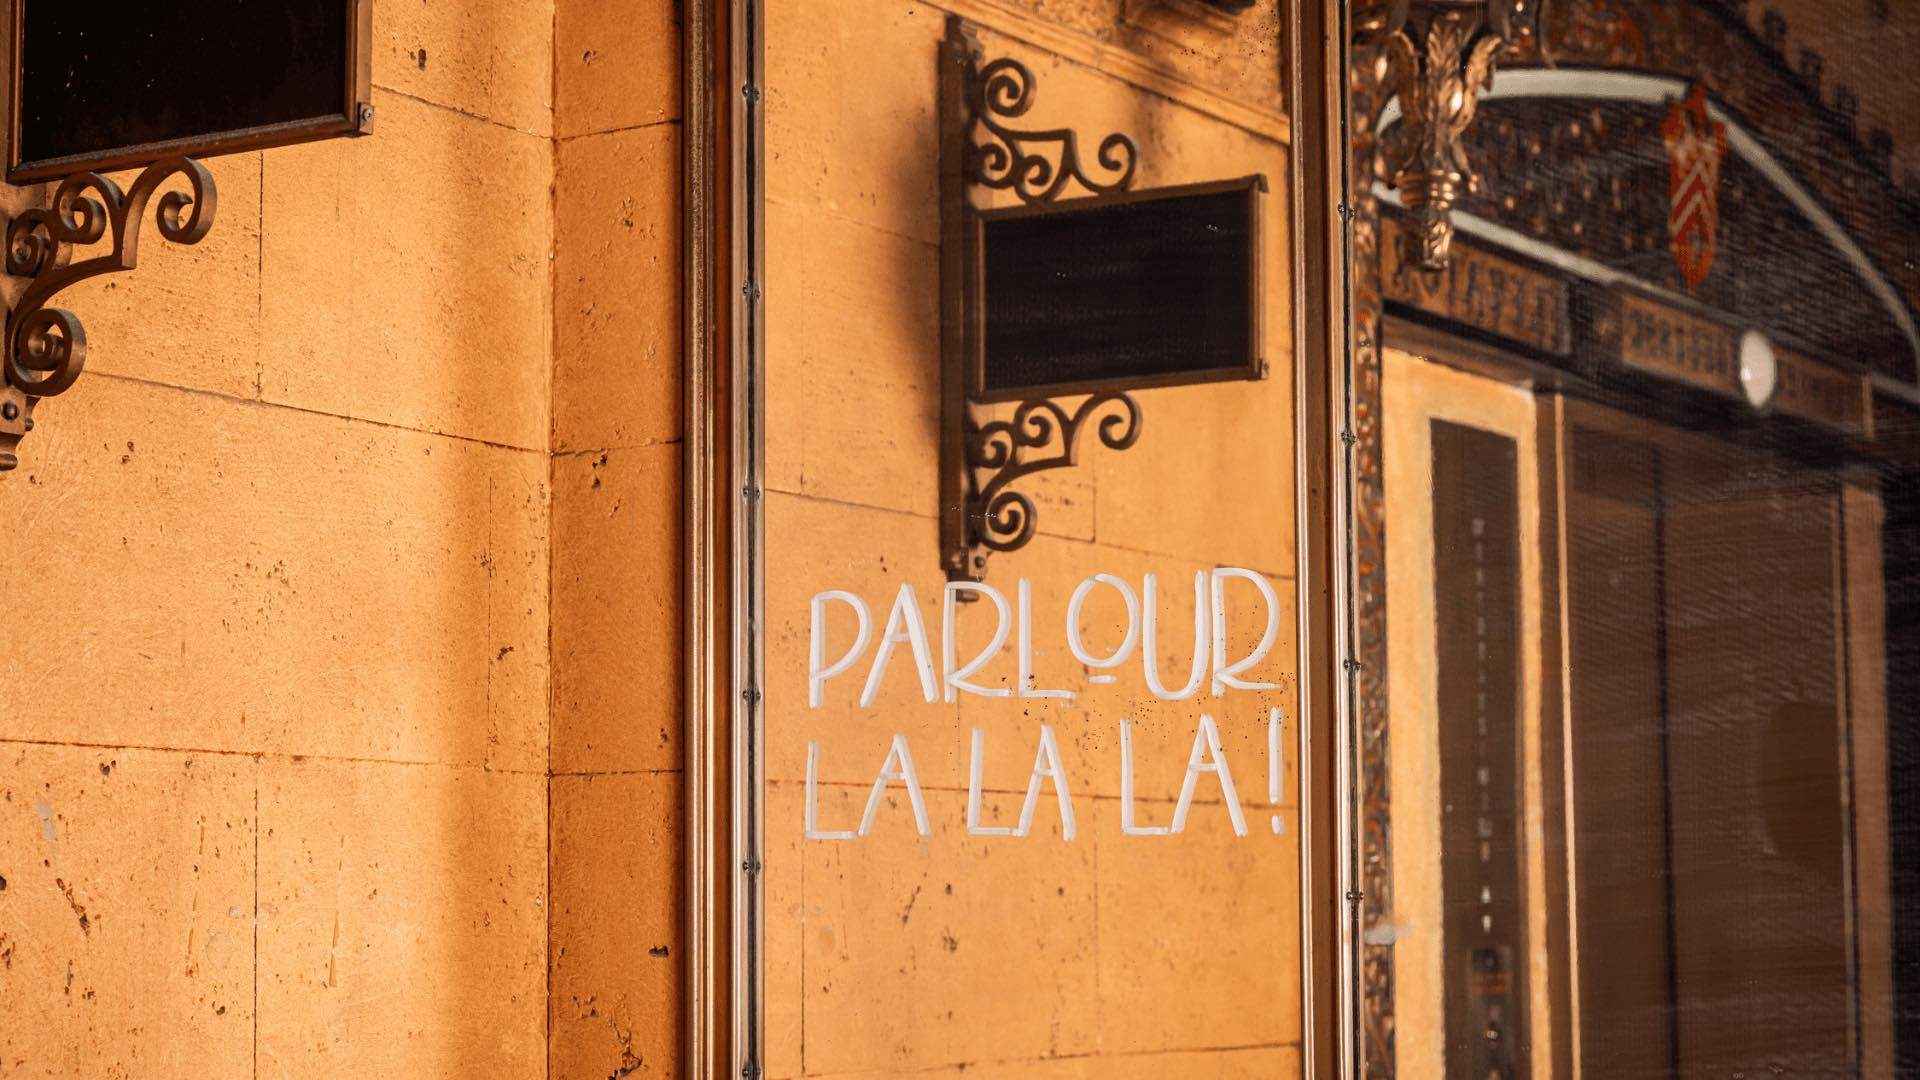 Photo of a mirror with "Parlour La La La" written on it.